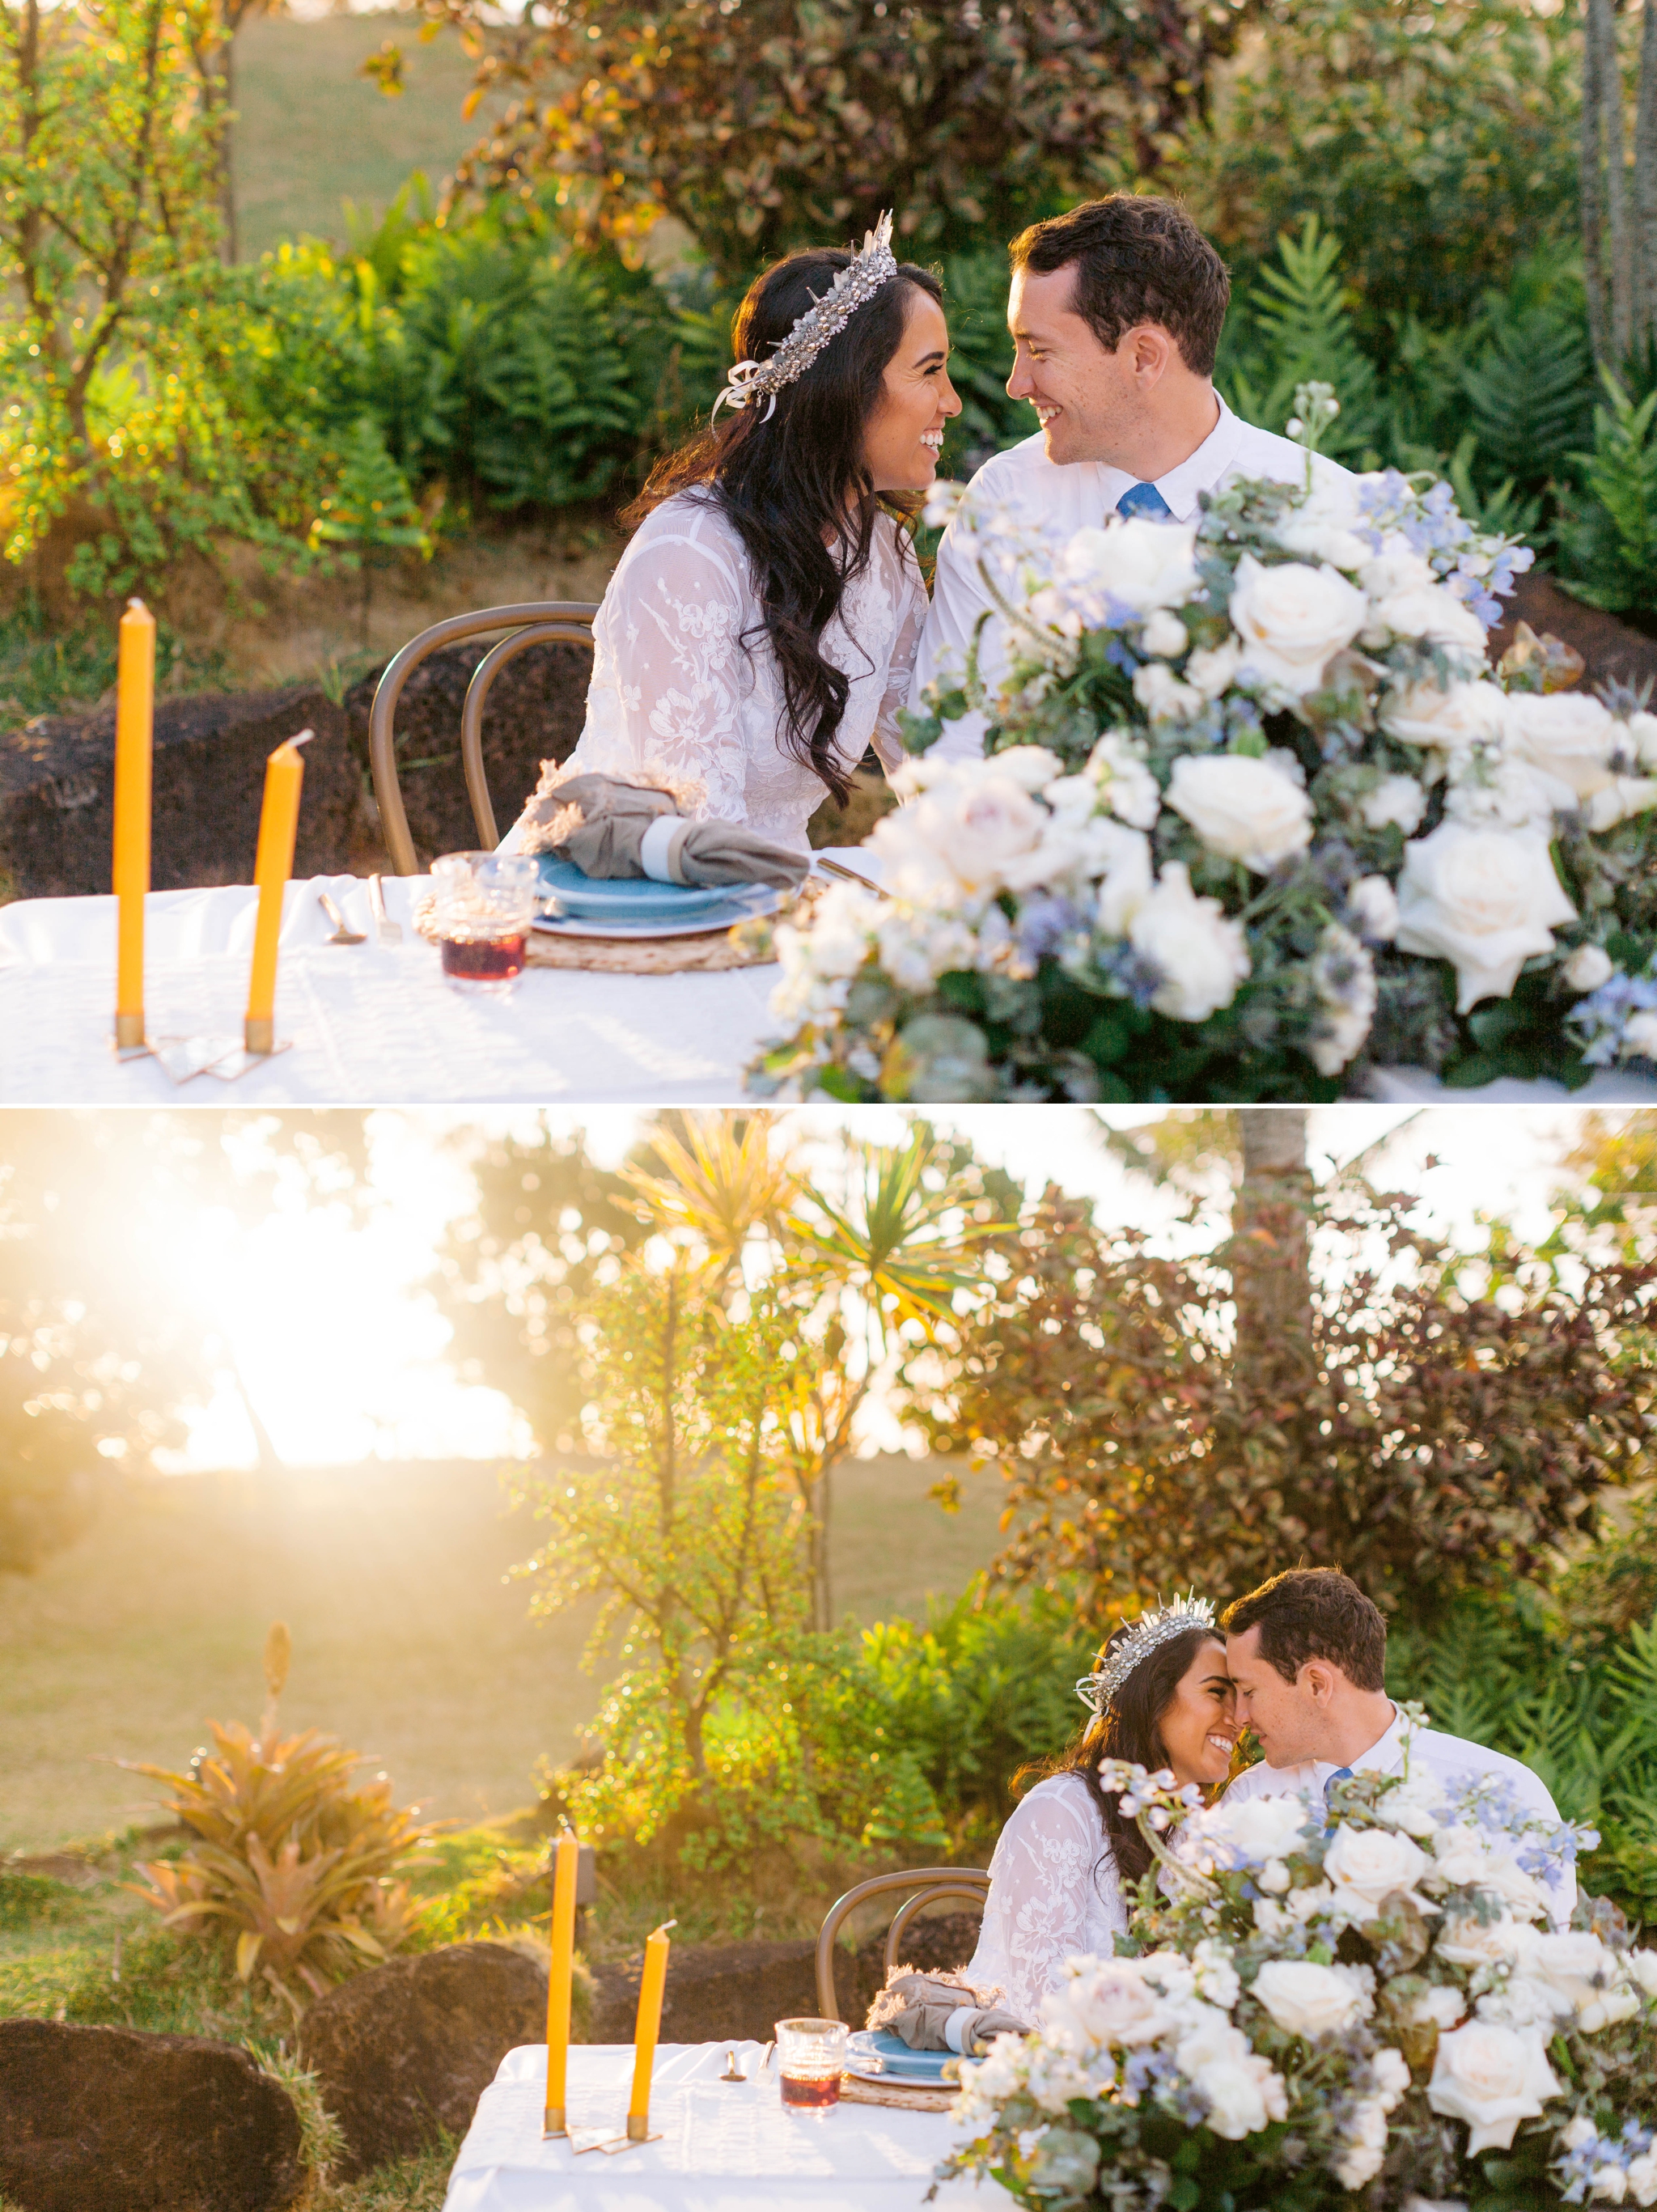  Bride and Groom at sunset for their outdoor wedding at their sweetheart table - Ana + Elijah - Wedding at Loulu Palm in Haleiwa, HI - Oahu Hawaii Wedding Photographer - #hawaiiweddingphotographer #oahuweddings #hawaiiweddings 